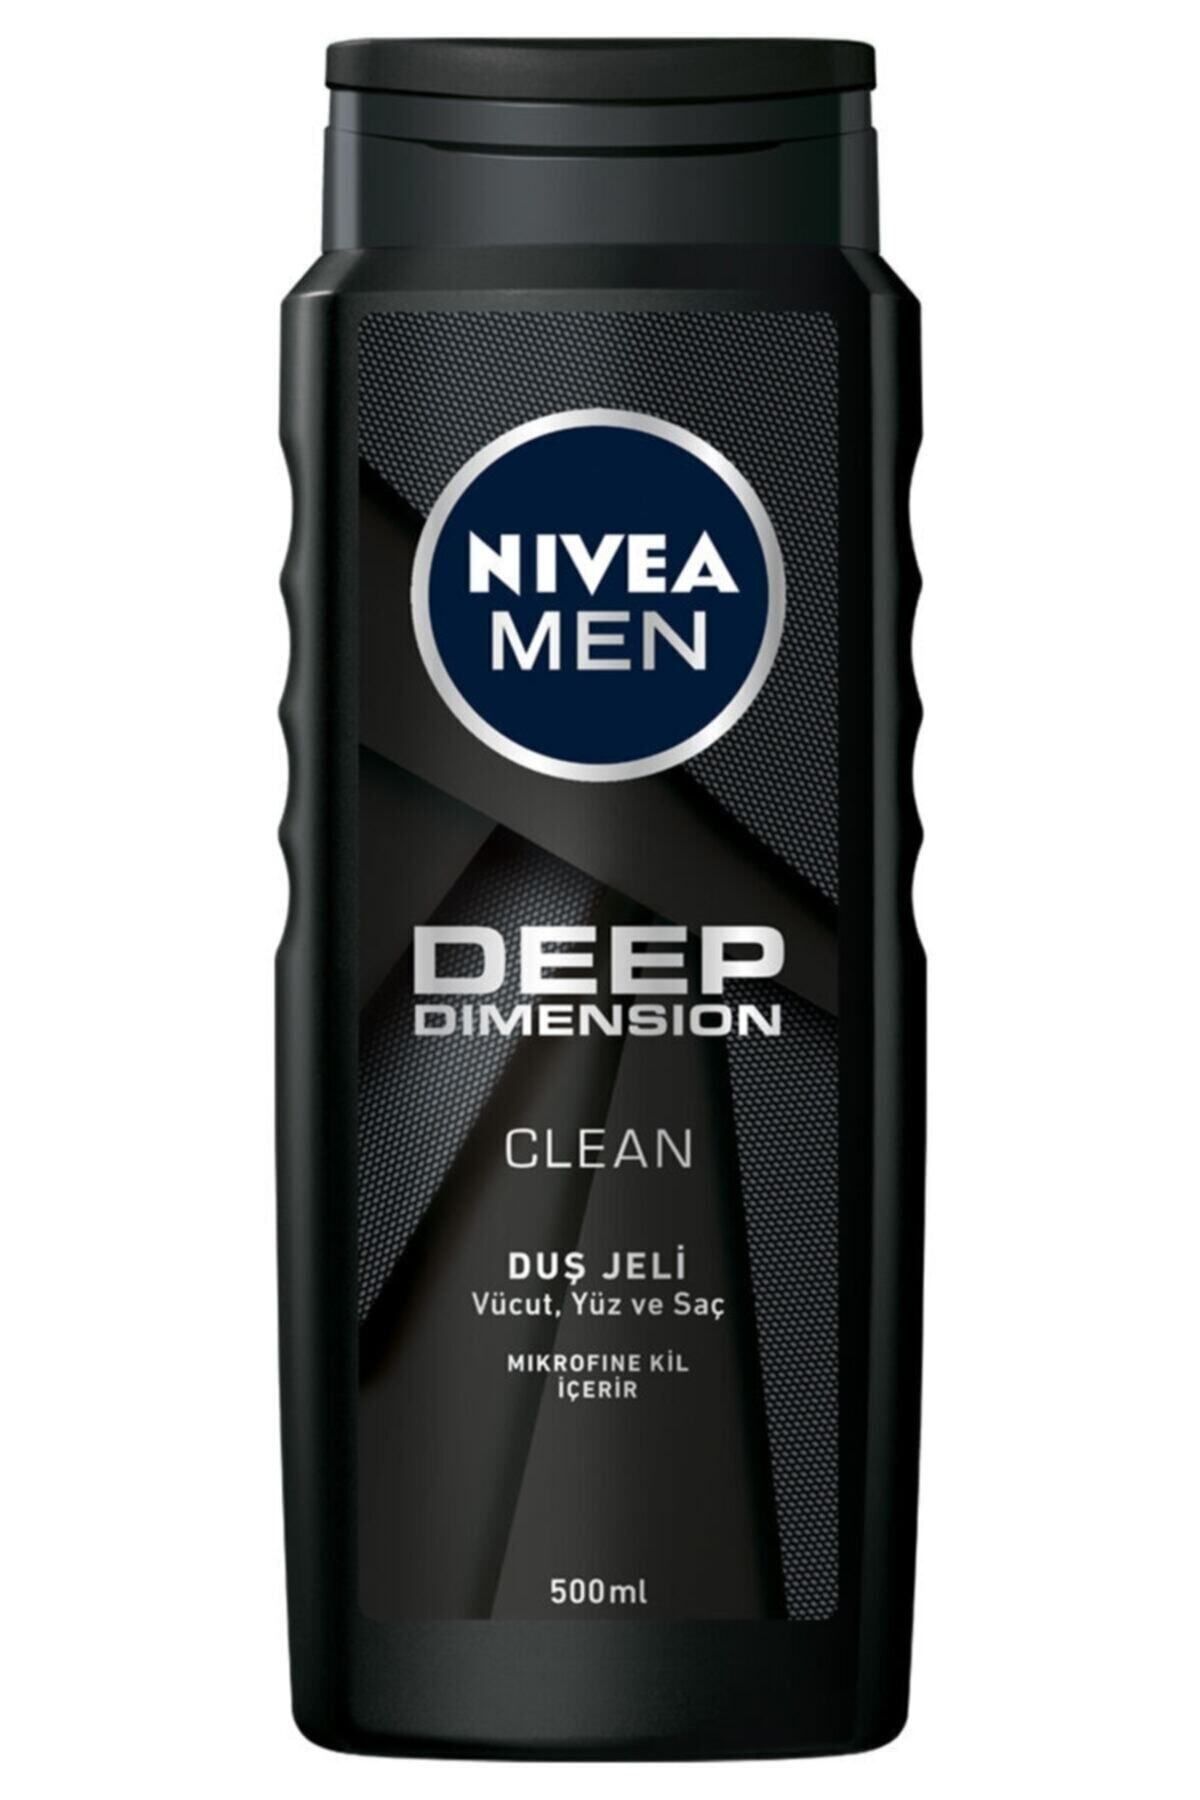 NIVEA ژل حمام مردانه عمیقا تمیز کننده و تازه کننده با بعد عمیق 500 میلی لیتر